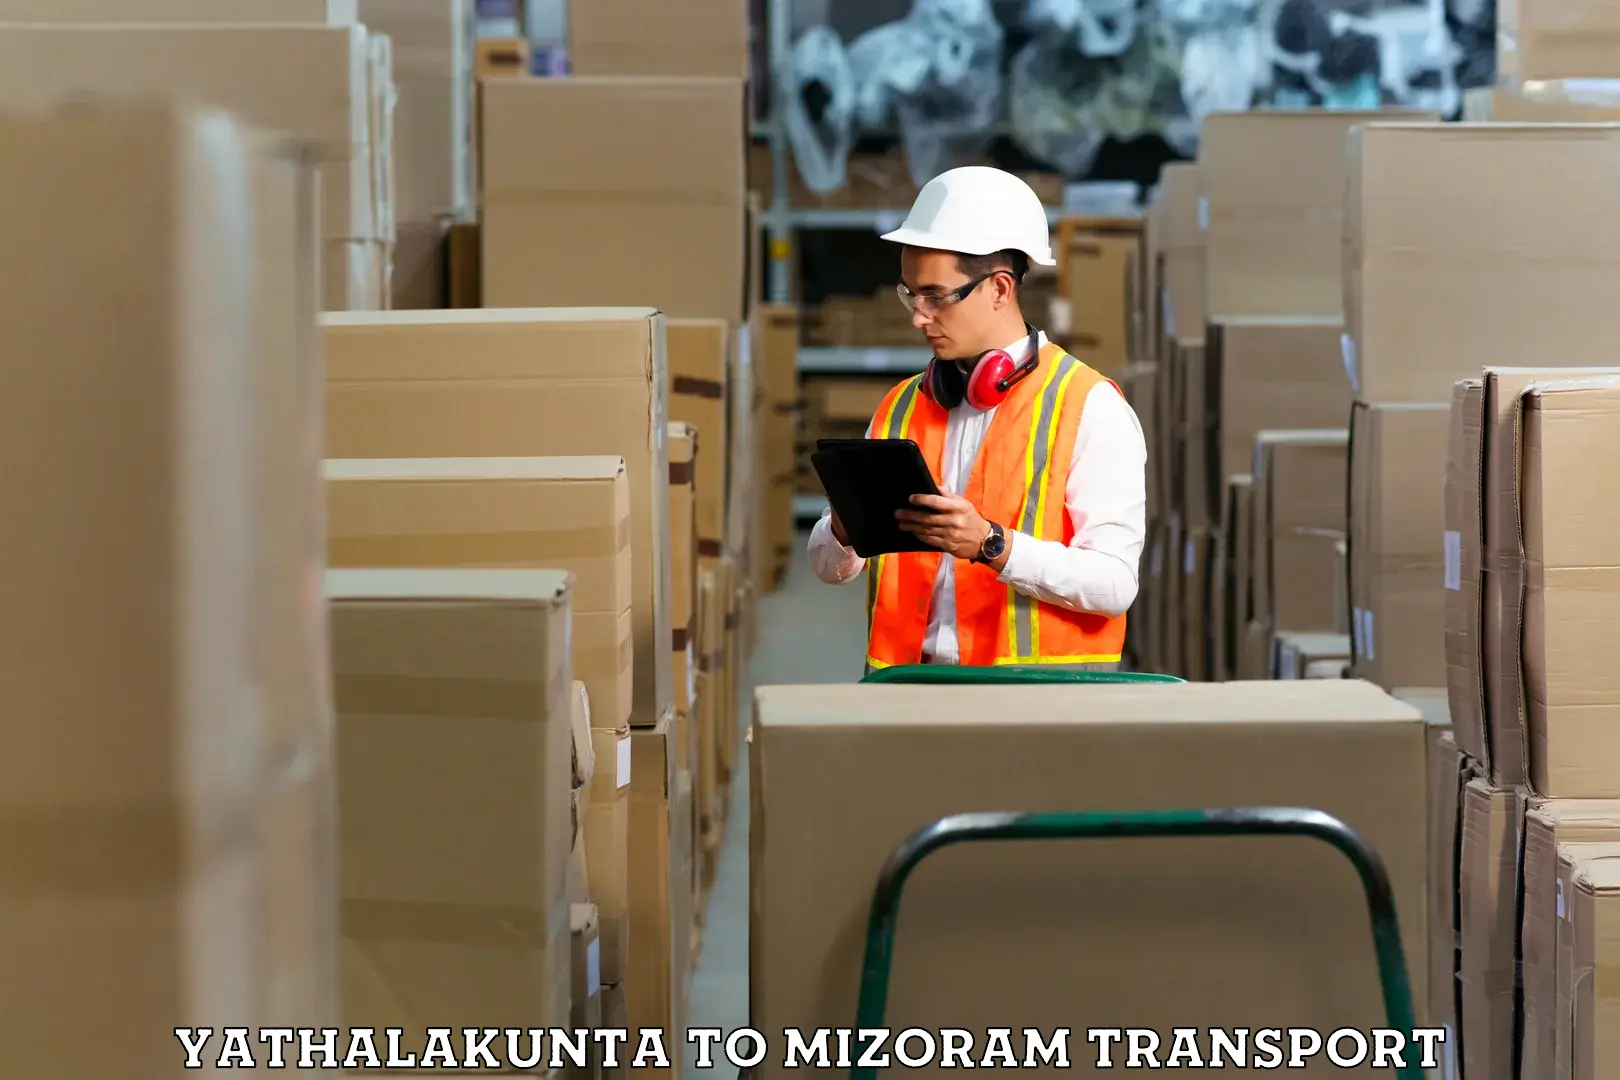 Truck transport companies in India Yathalakunta to Mizoram